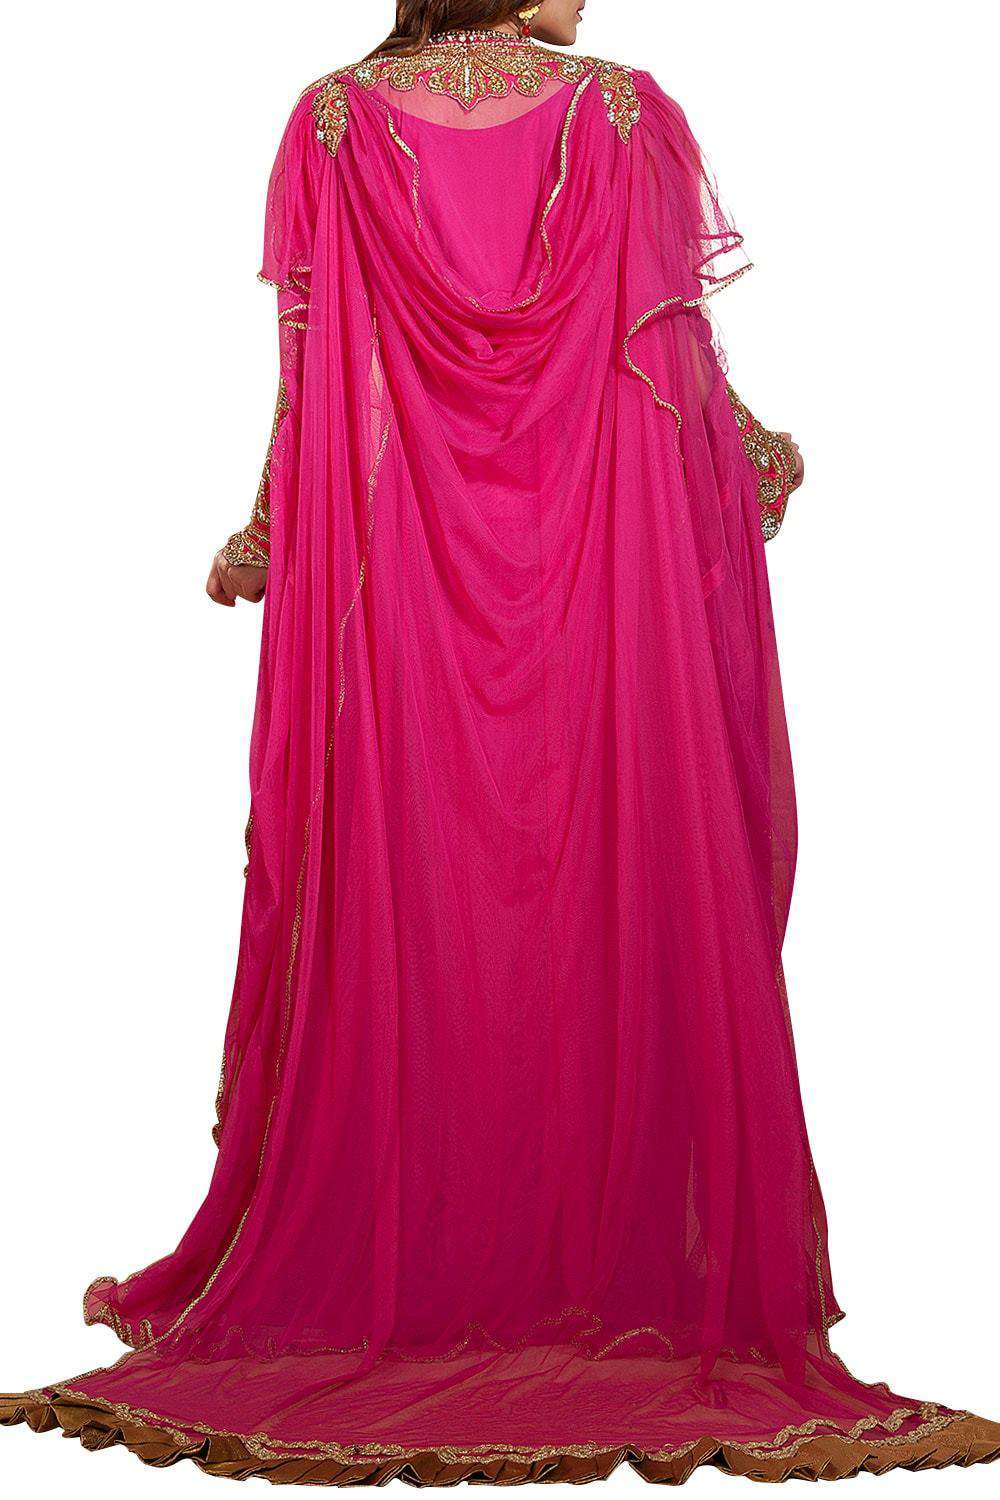 Pink Color Hand Beaded Dubai Ladies Long Sleeve Designer Farasha